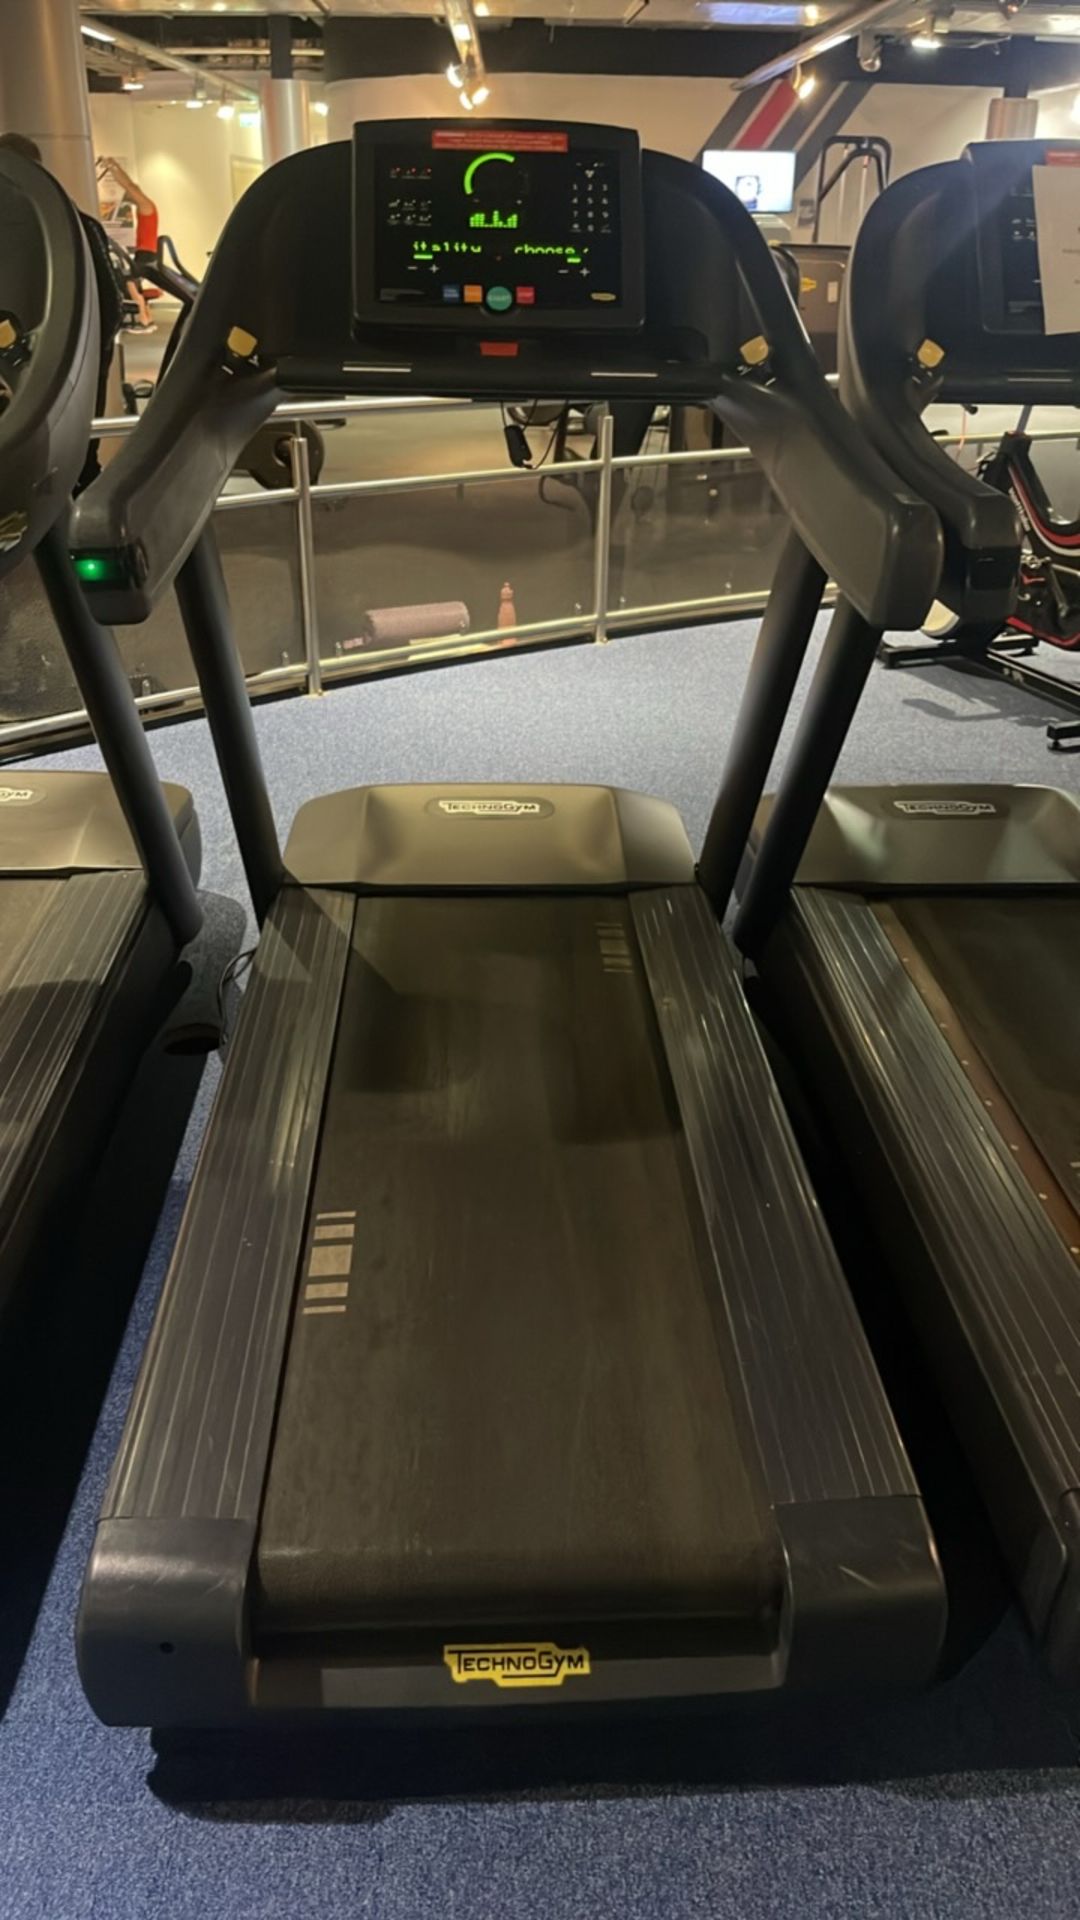 Technogym Treadmill 1000 - Image 2 of 6